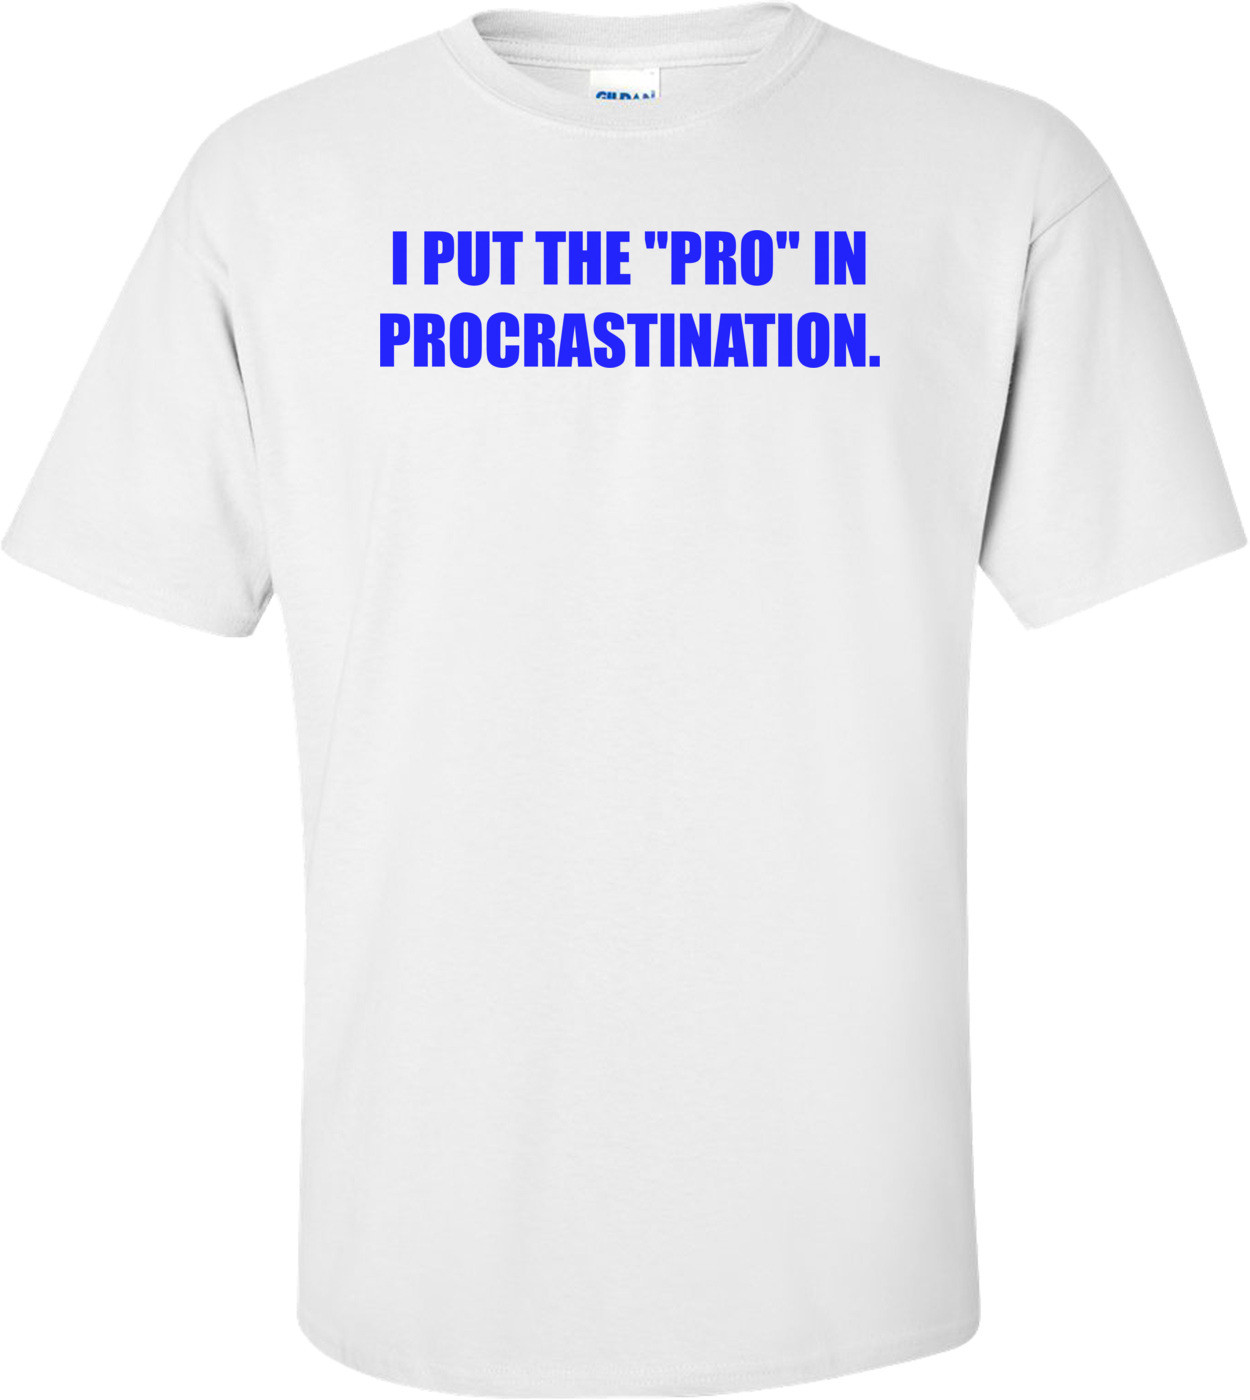 I PUT THE "PRO" IN PROCRASTINATION. Shirt